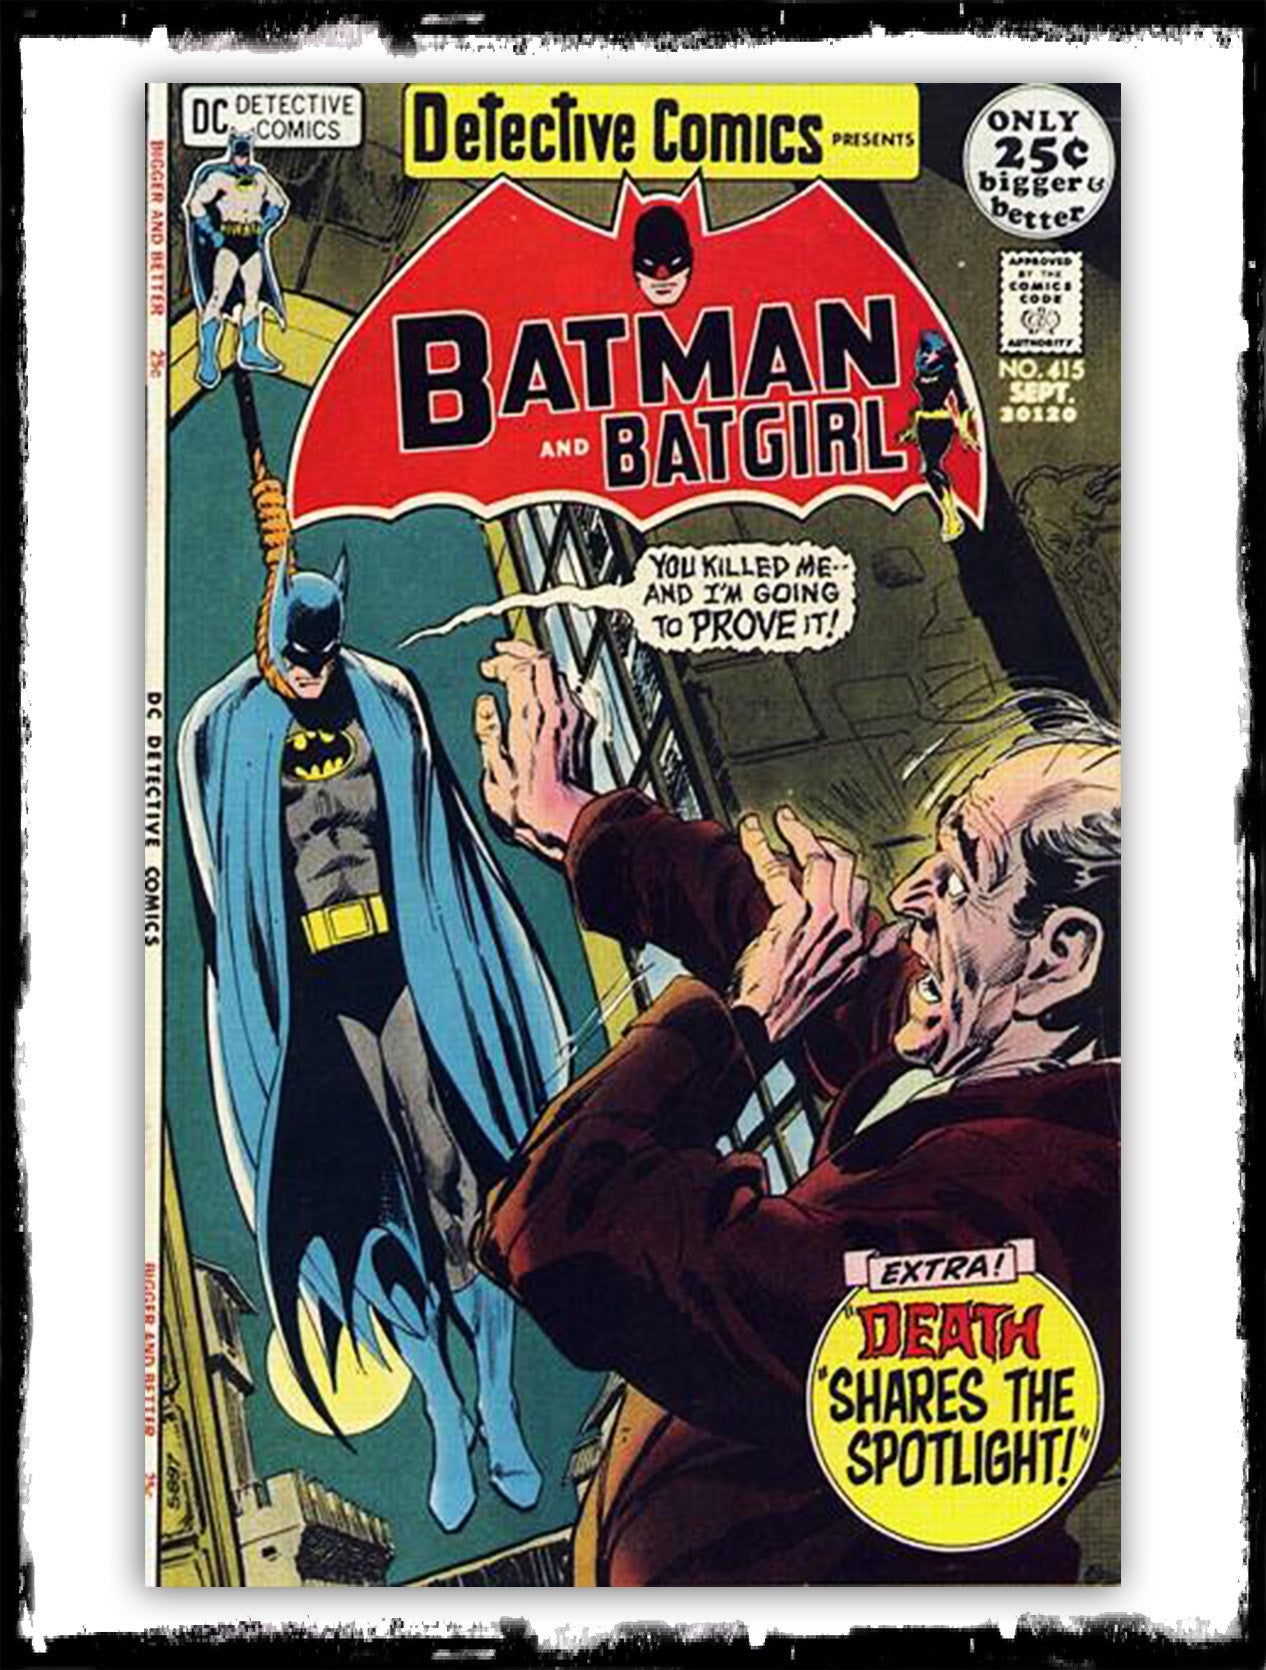 DETECTIVE COMICS - #415 NEAL ADAMS COVER (1971 - VF)